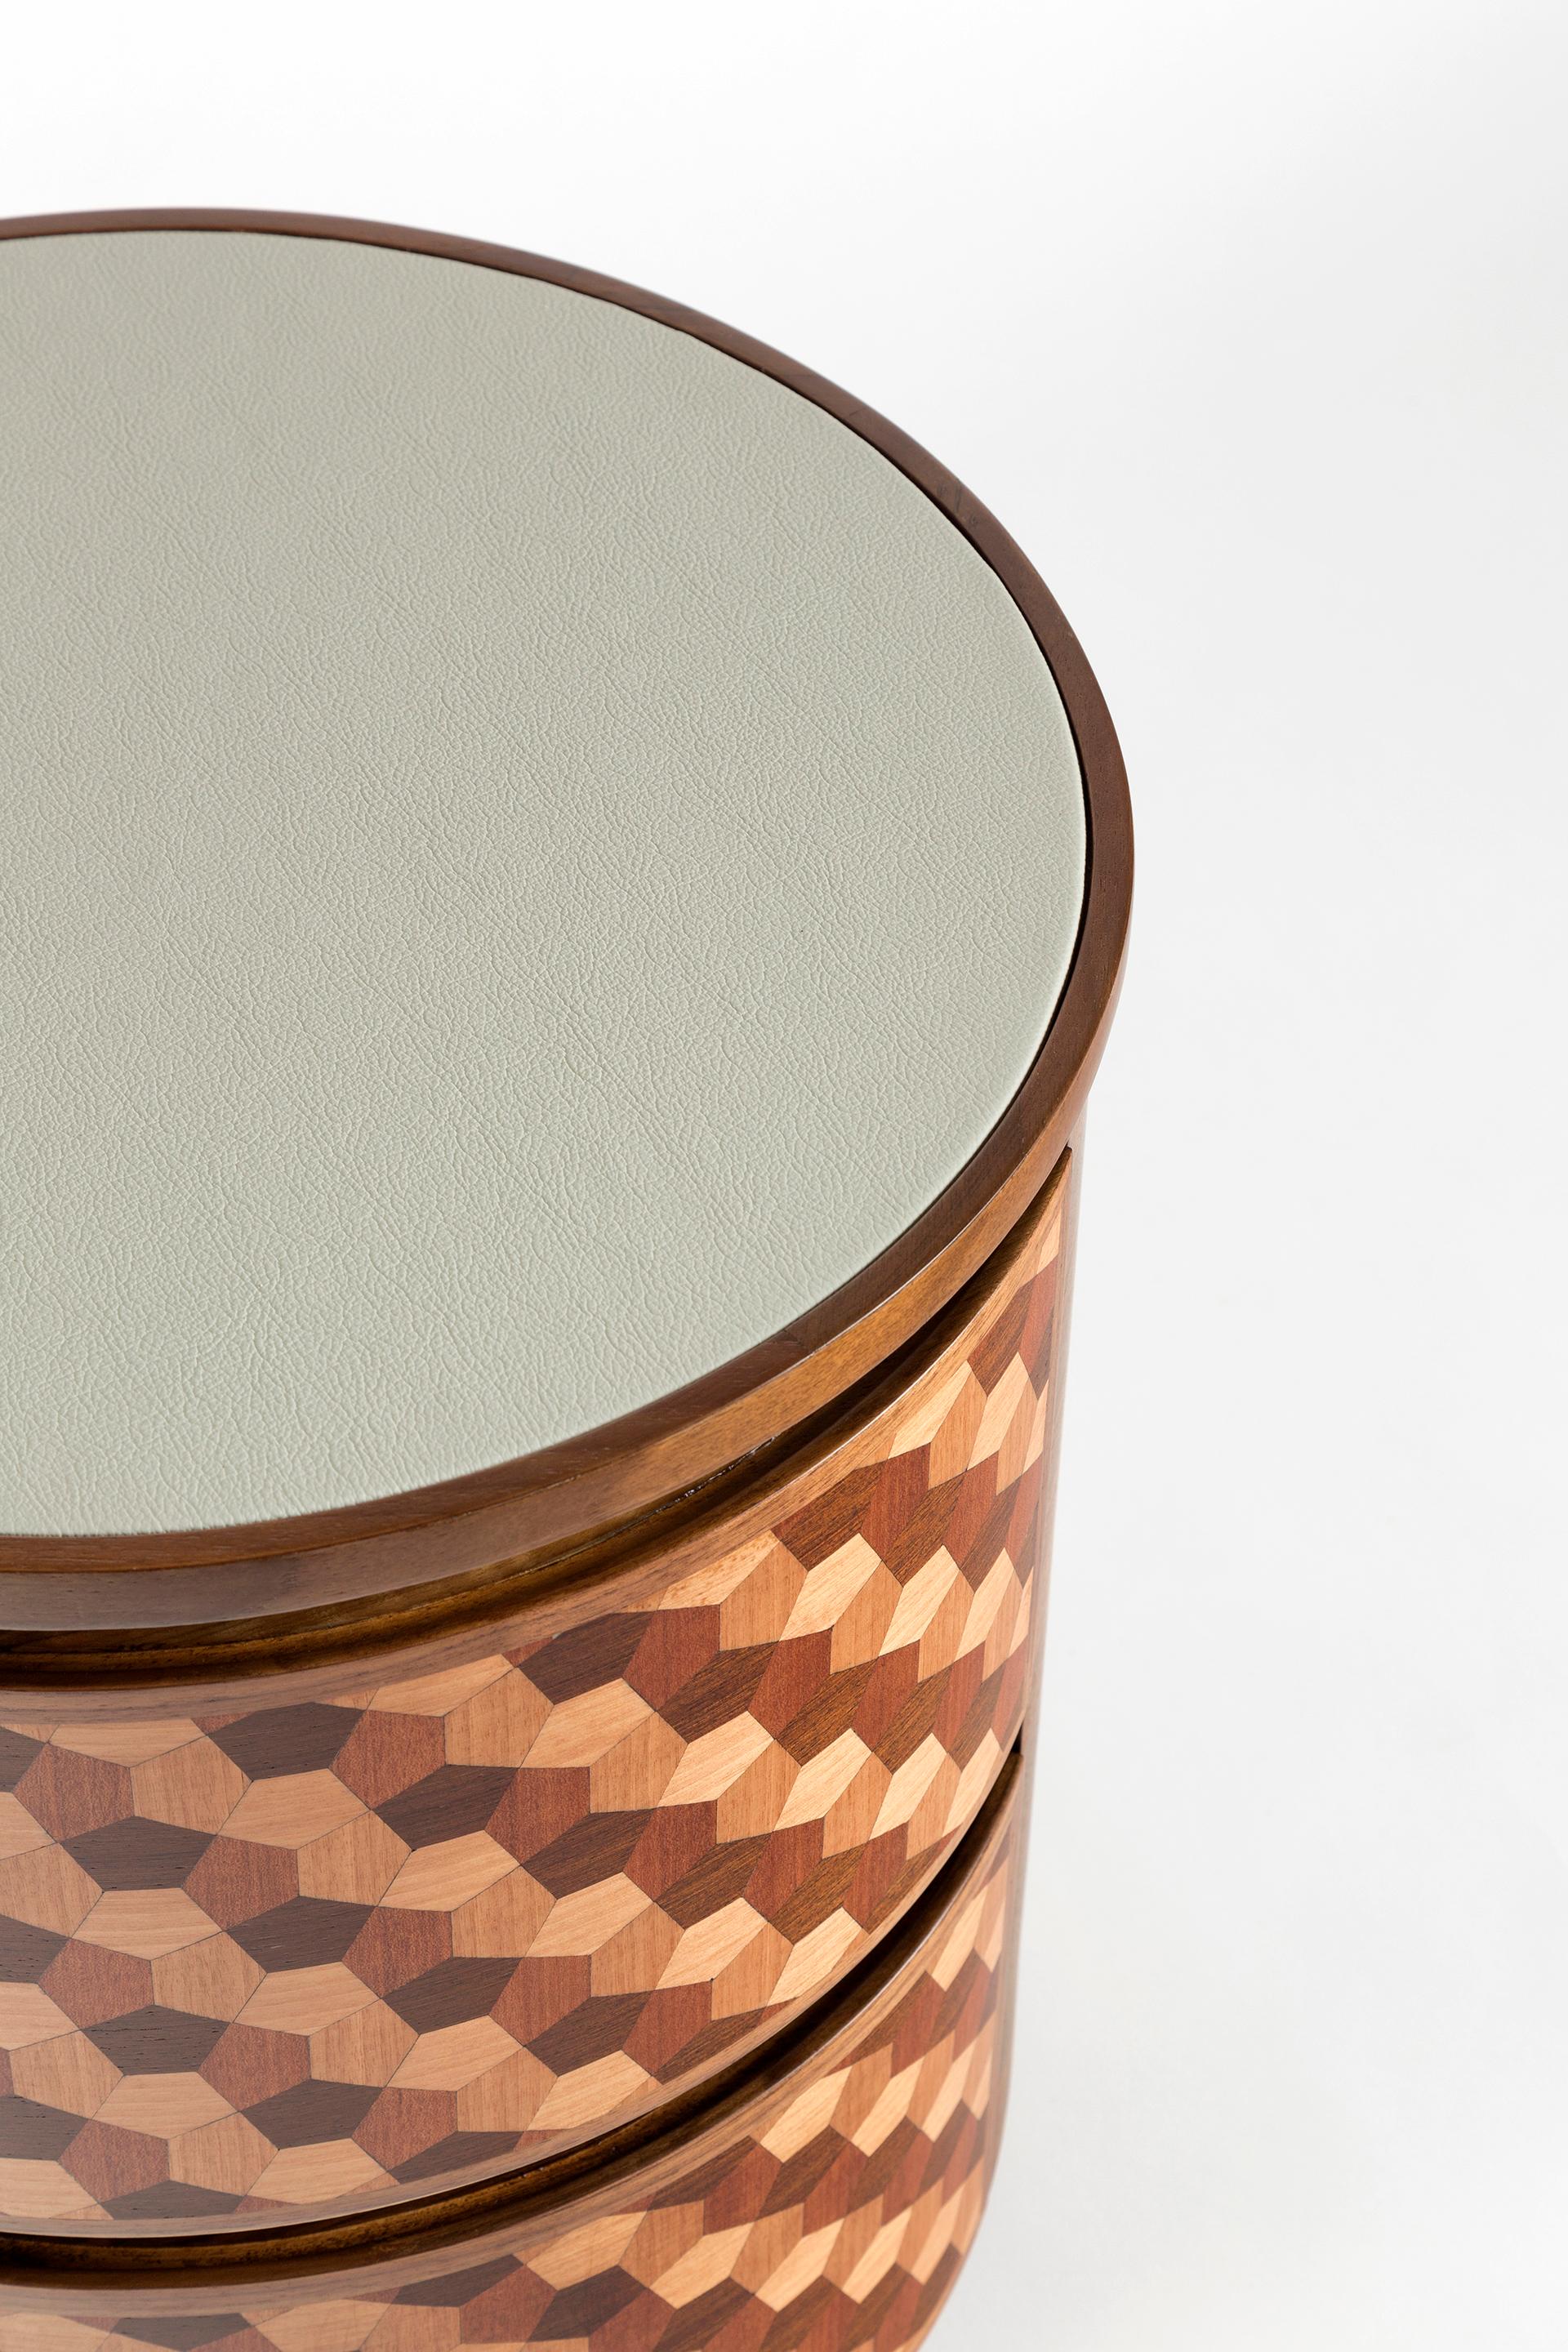 Turkish 21st Century Marquetry Wood Veneer Geometric Nightstand For Sale